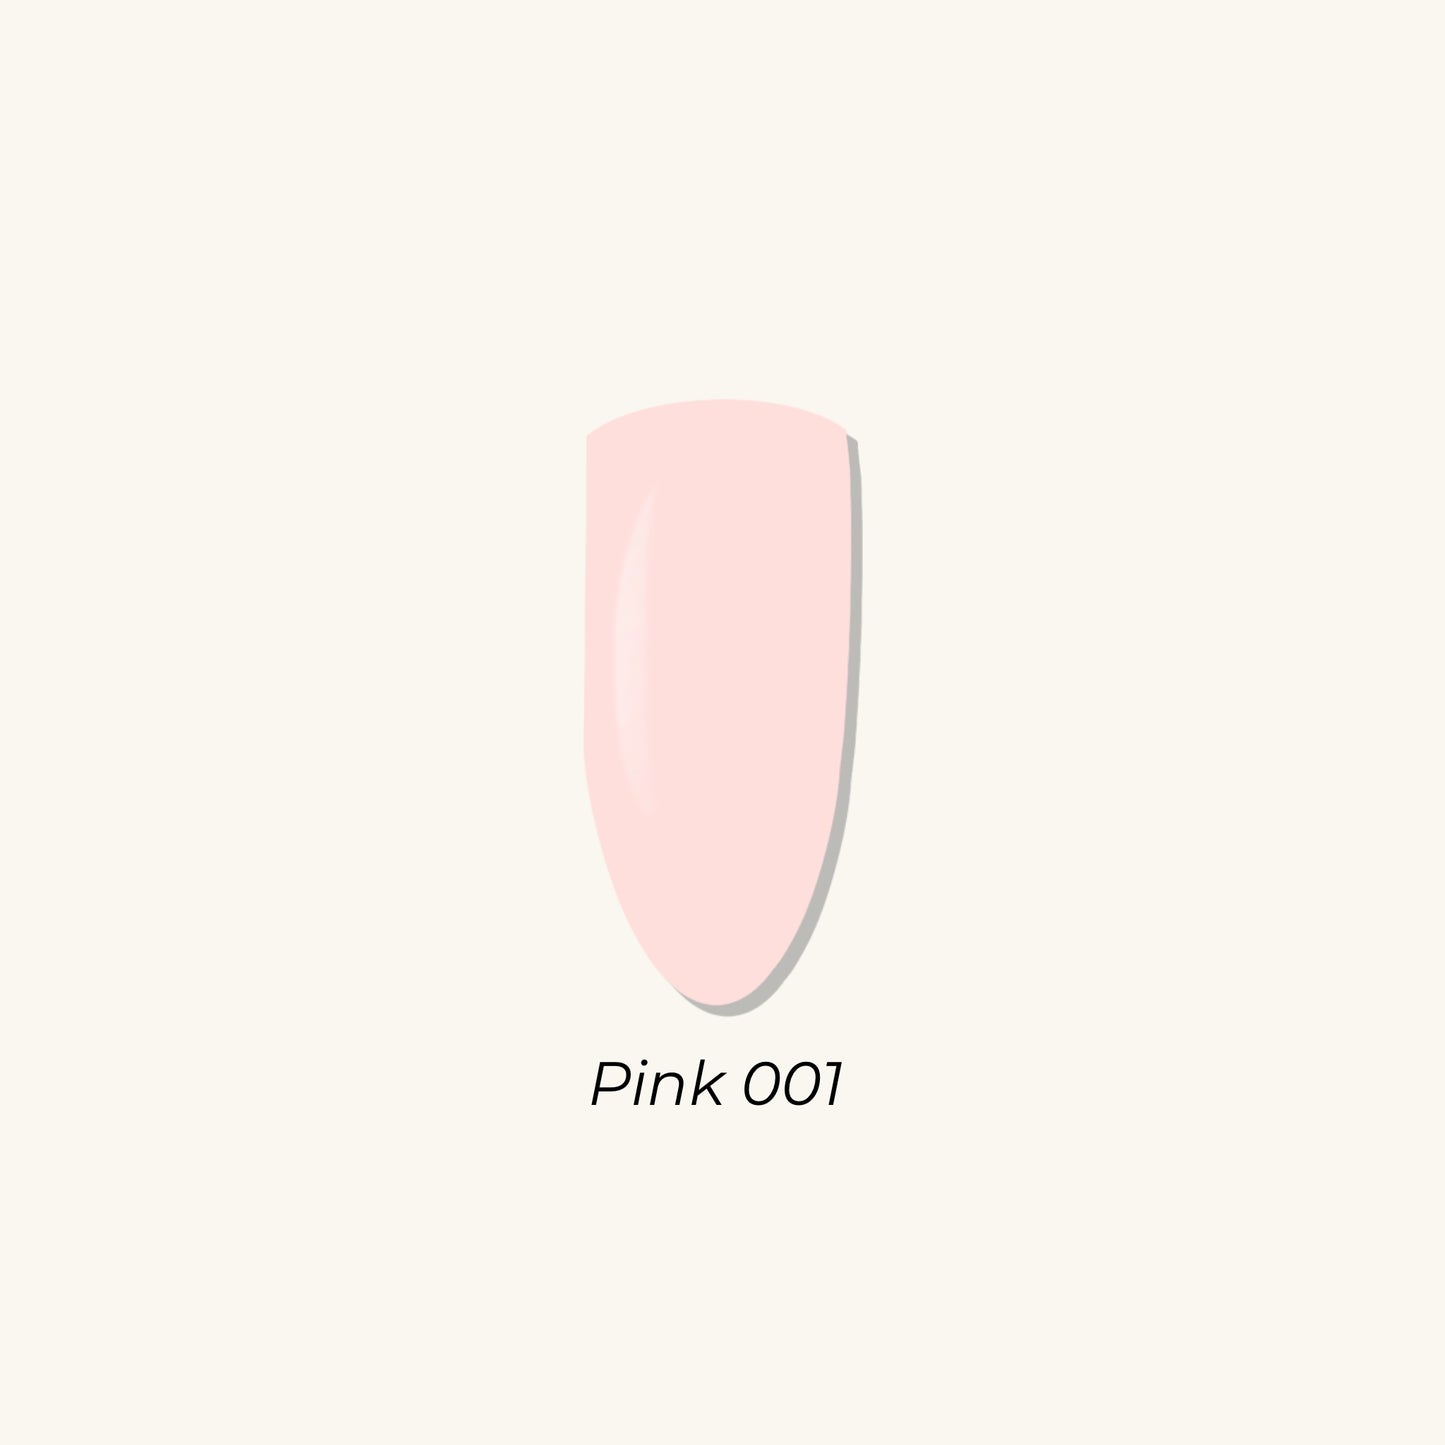 Pink 001